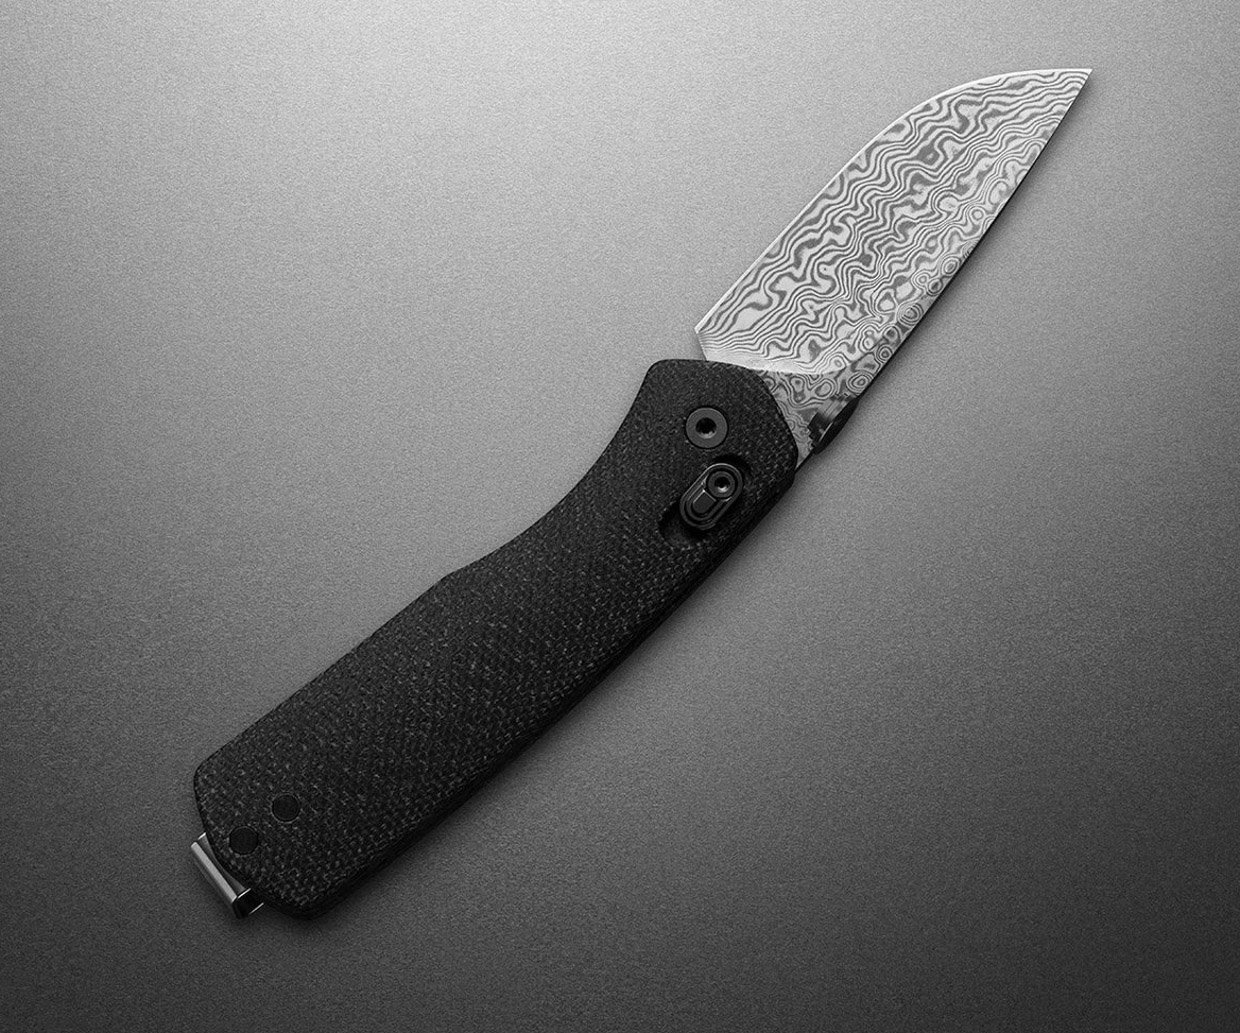 The James Brand Carter Knife